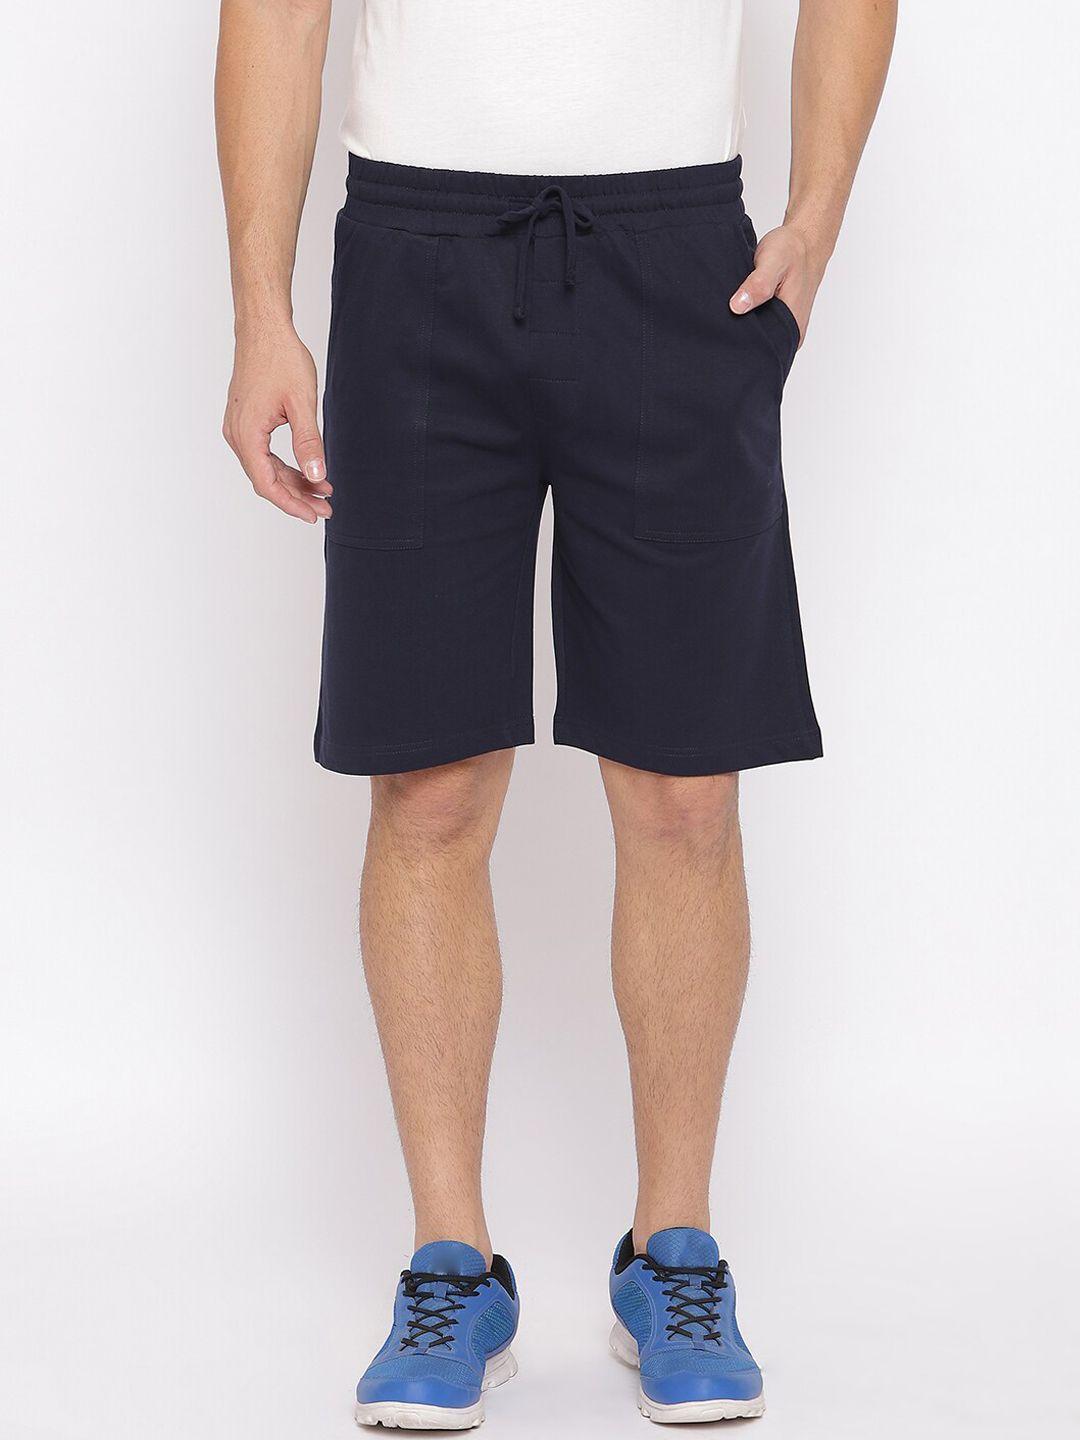 r&b men navy blue sports shorts